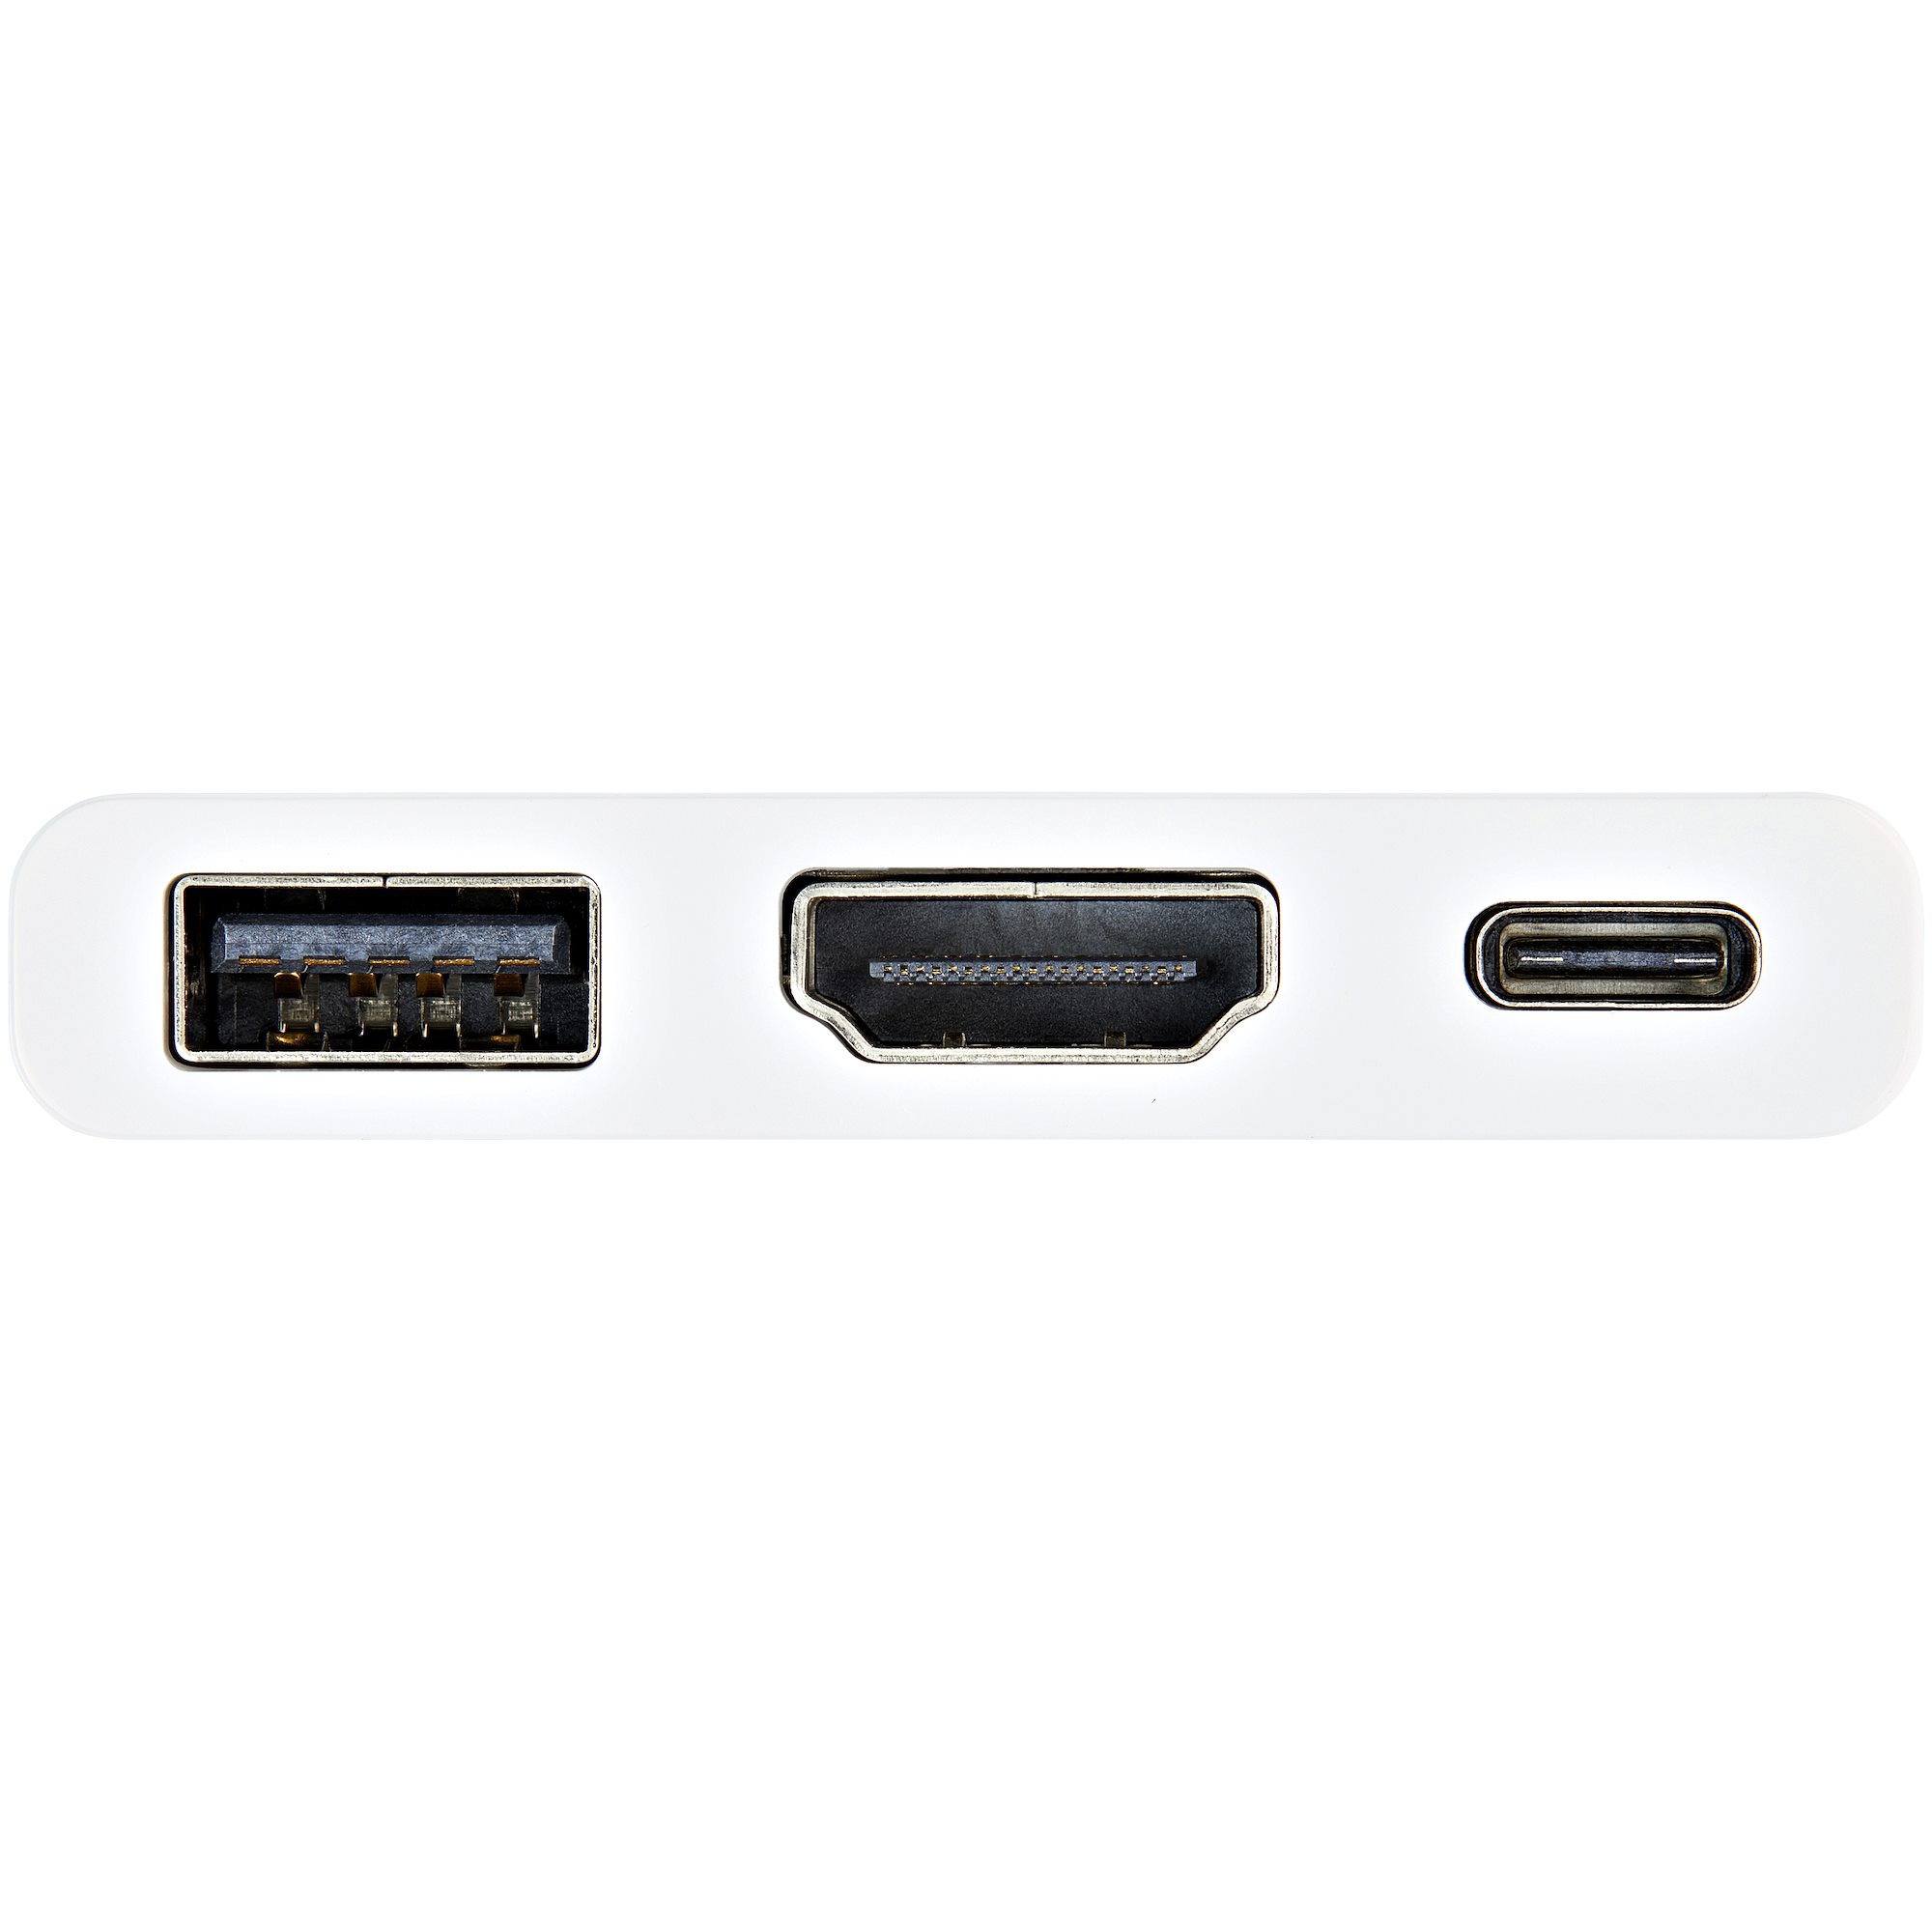 Adaptador multipuerto USB-C a HDMI 4K o VGA de StarTech.com con Hub USB  3.0, GbE y PD de 100W - Docking station Portátil - LDLC